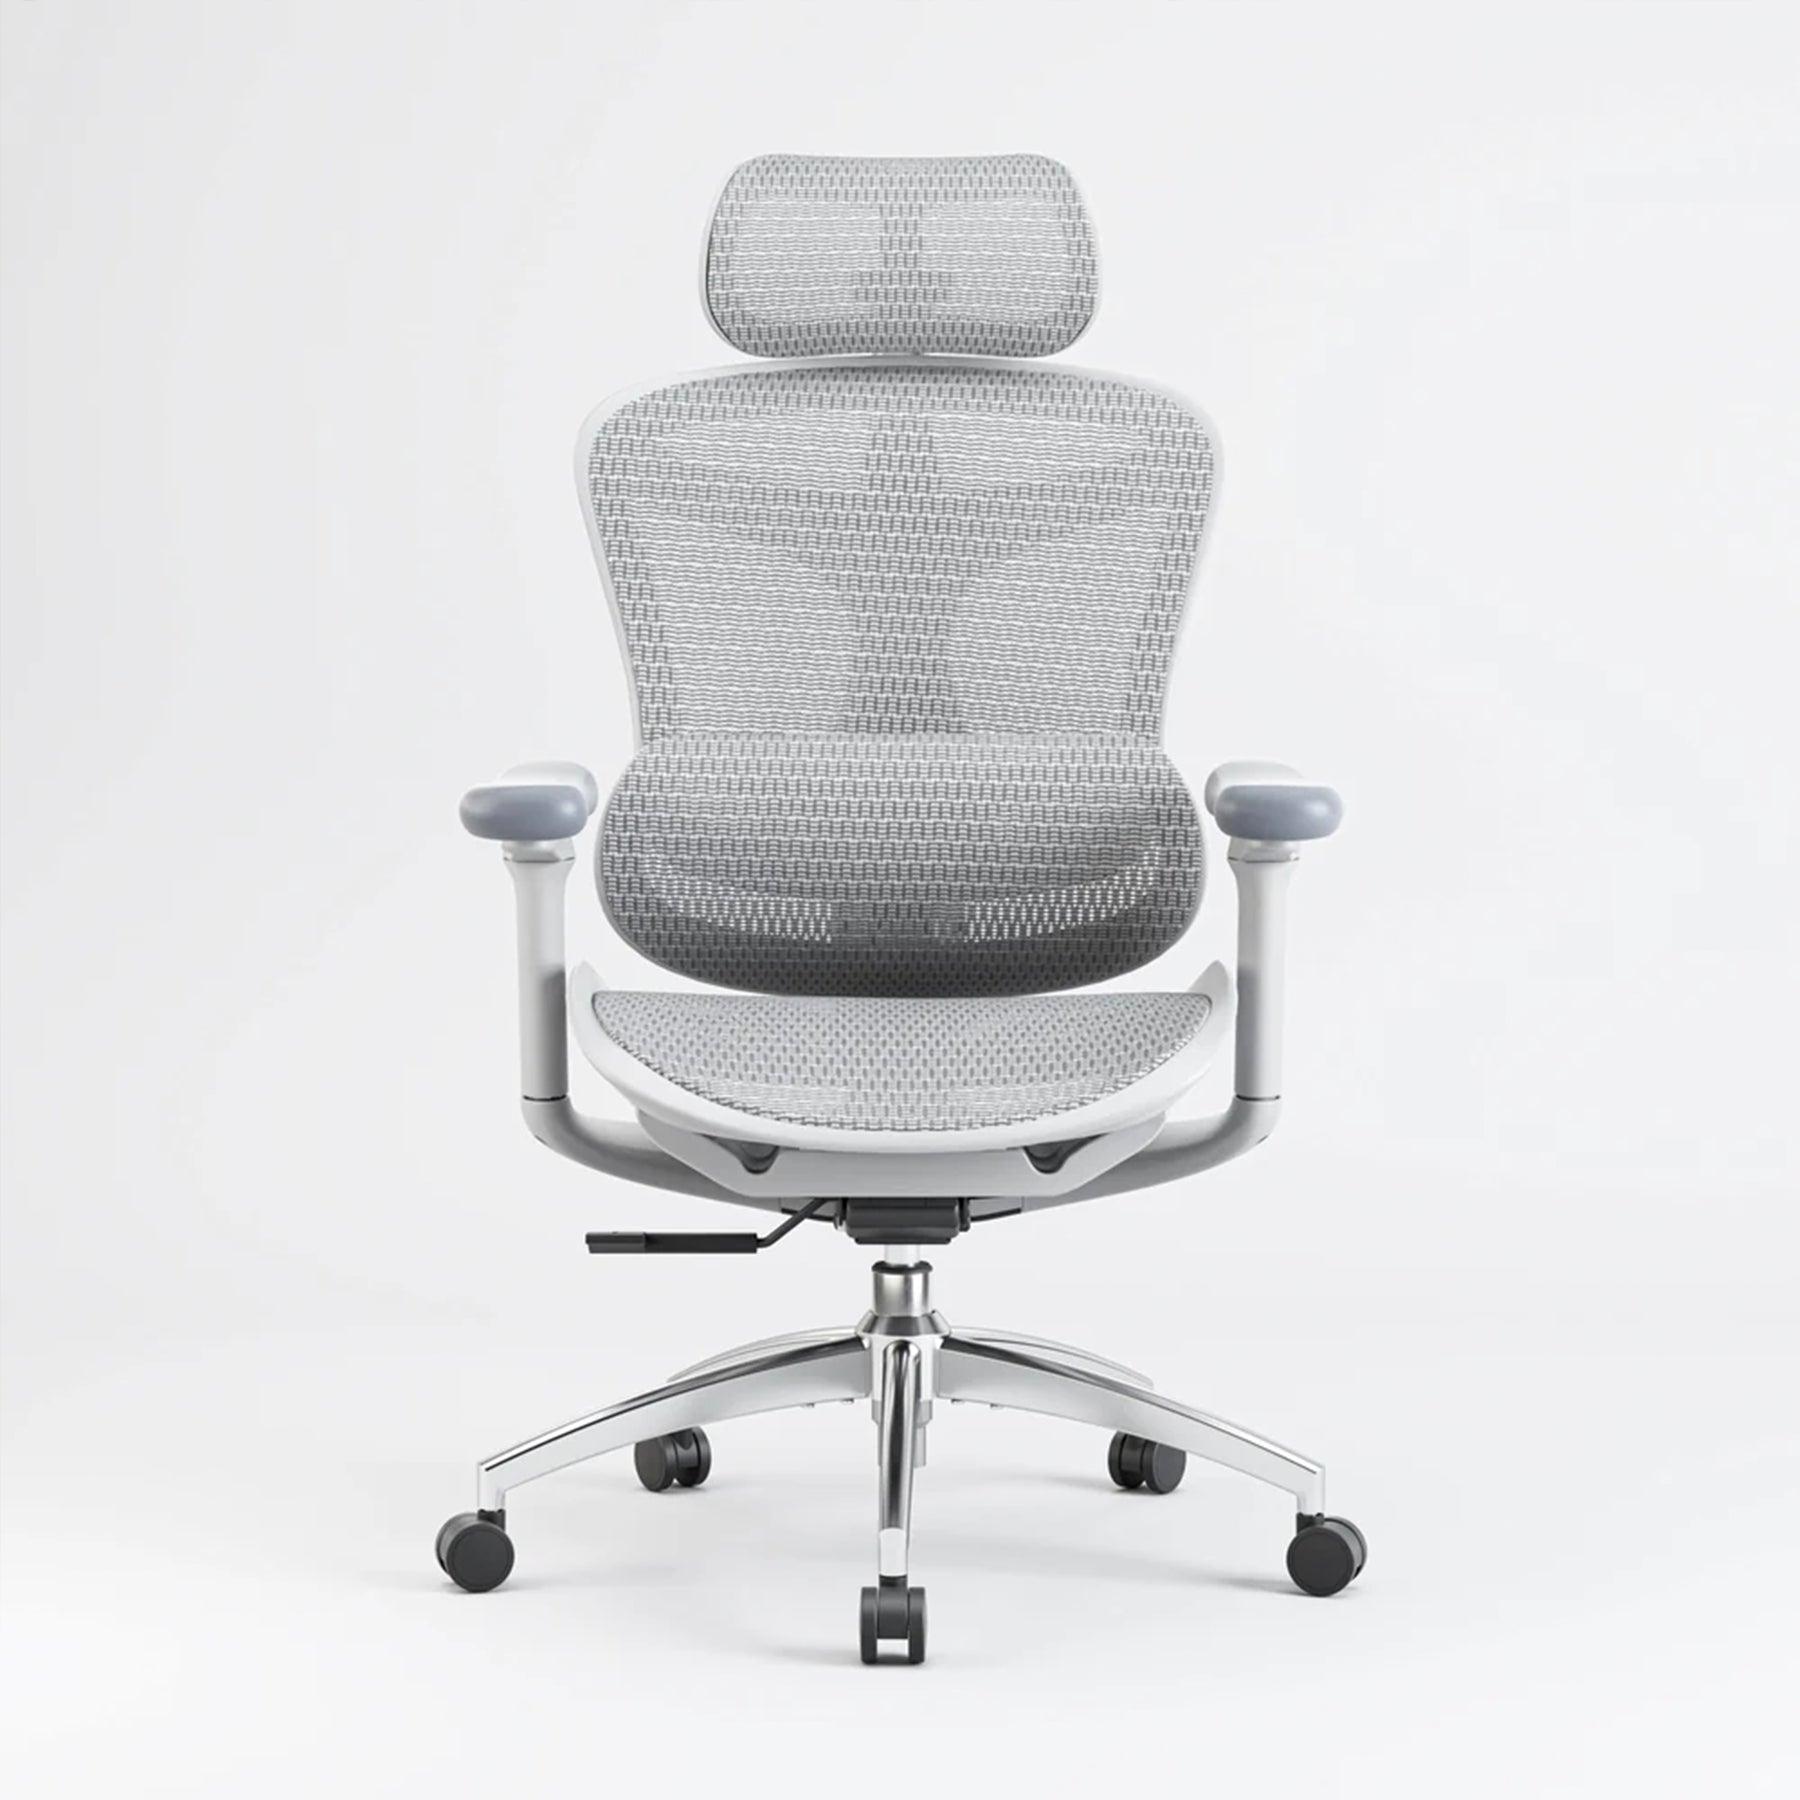 Sihoo M57 vs Sihoo Doro C300 Ergonomic Chair: Why Doro C300 is the Better  Choice